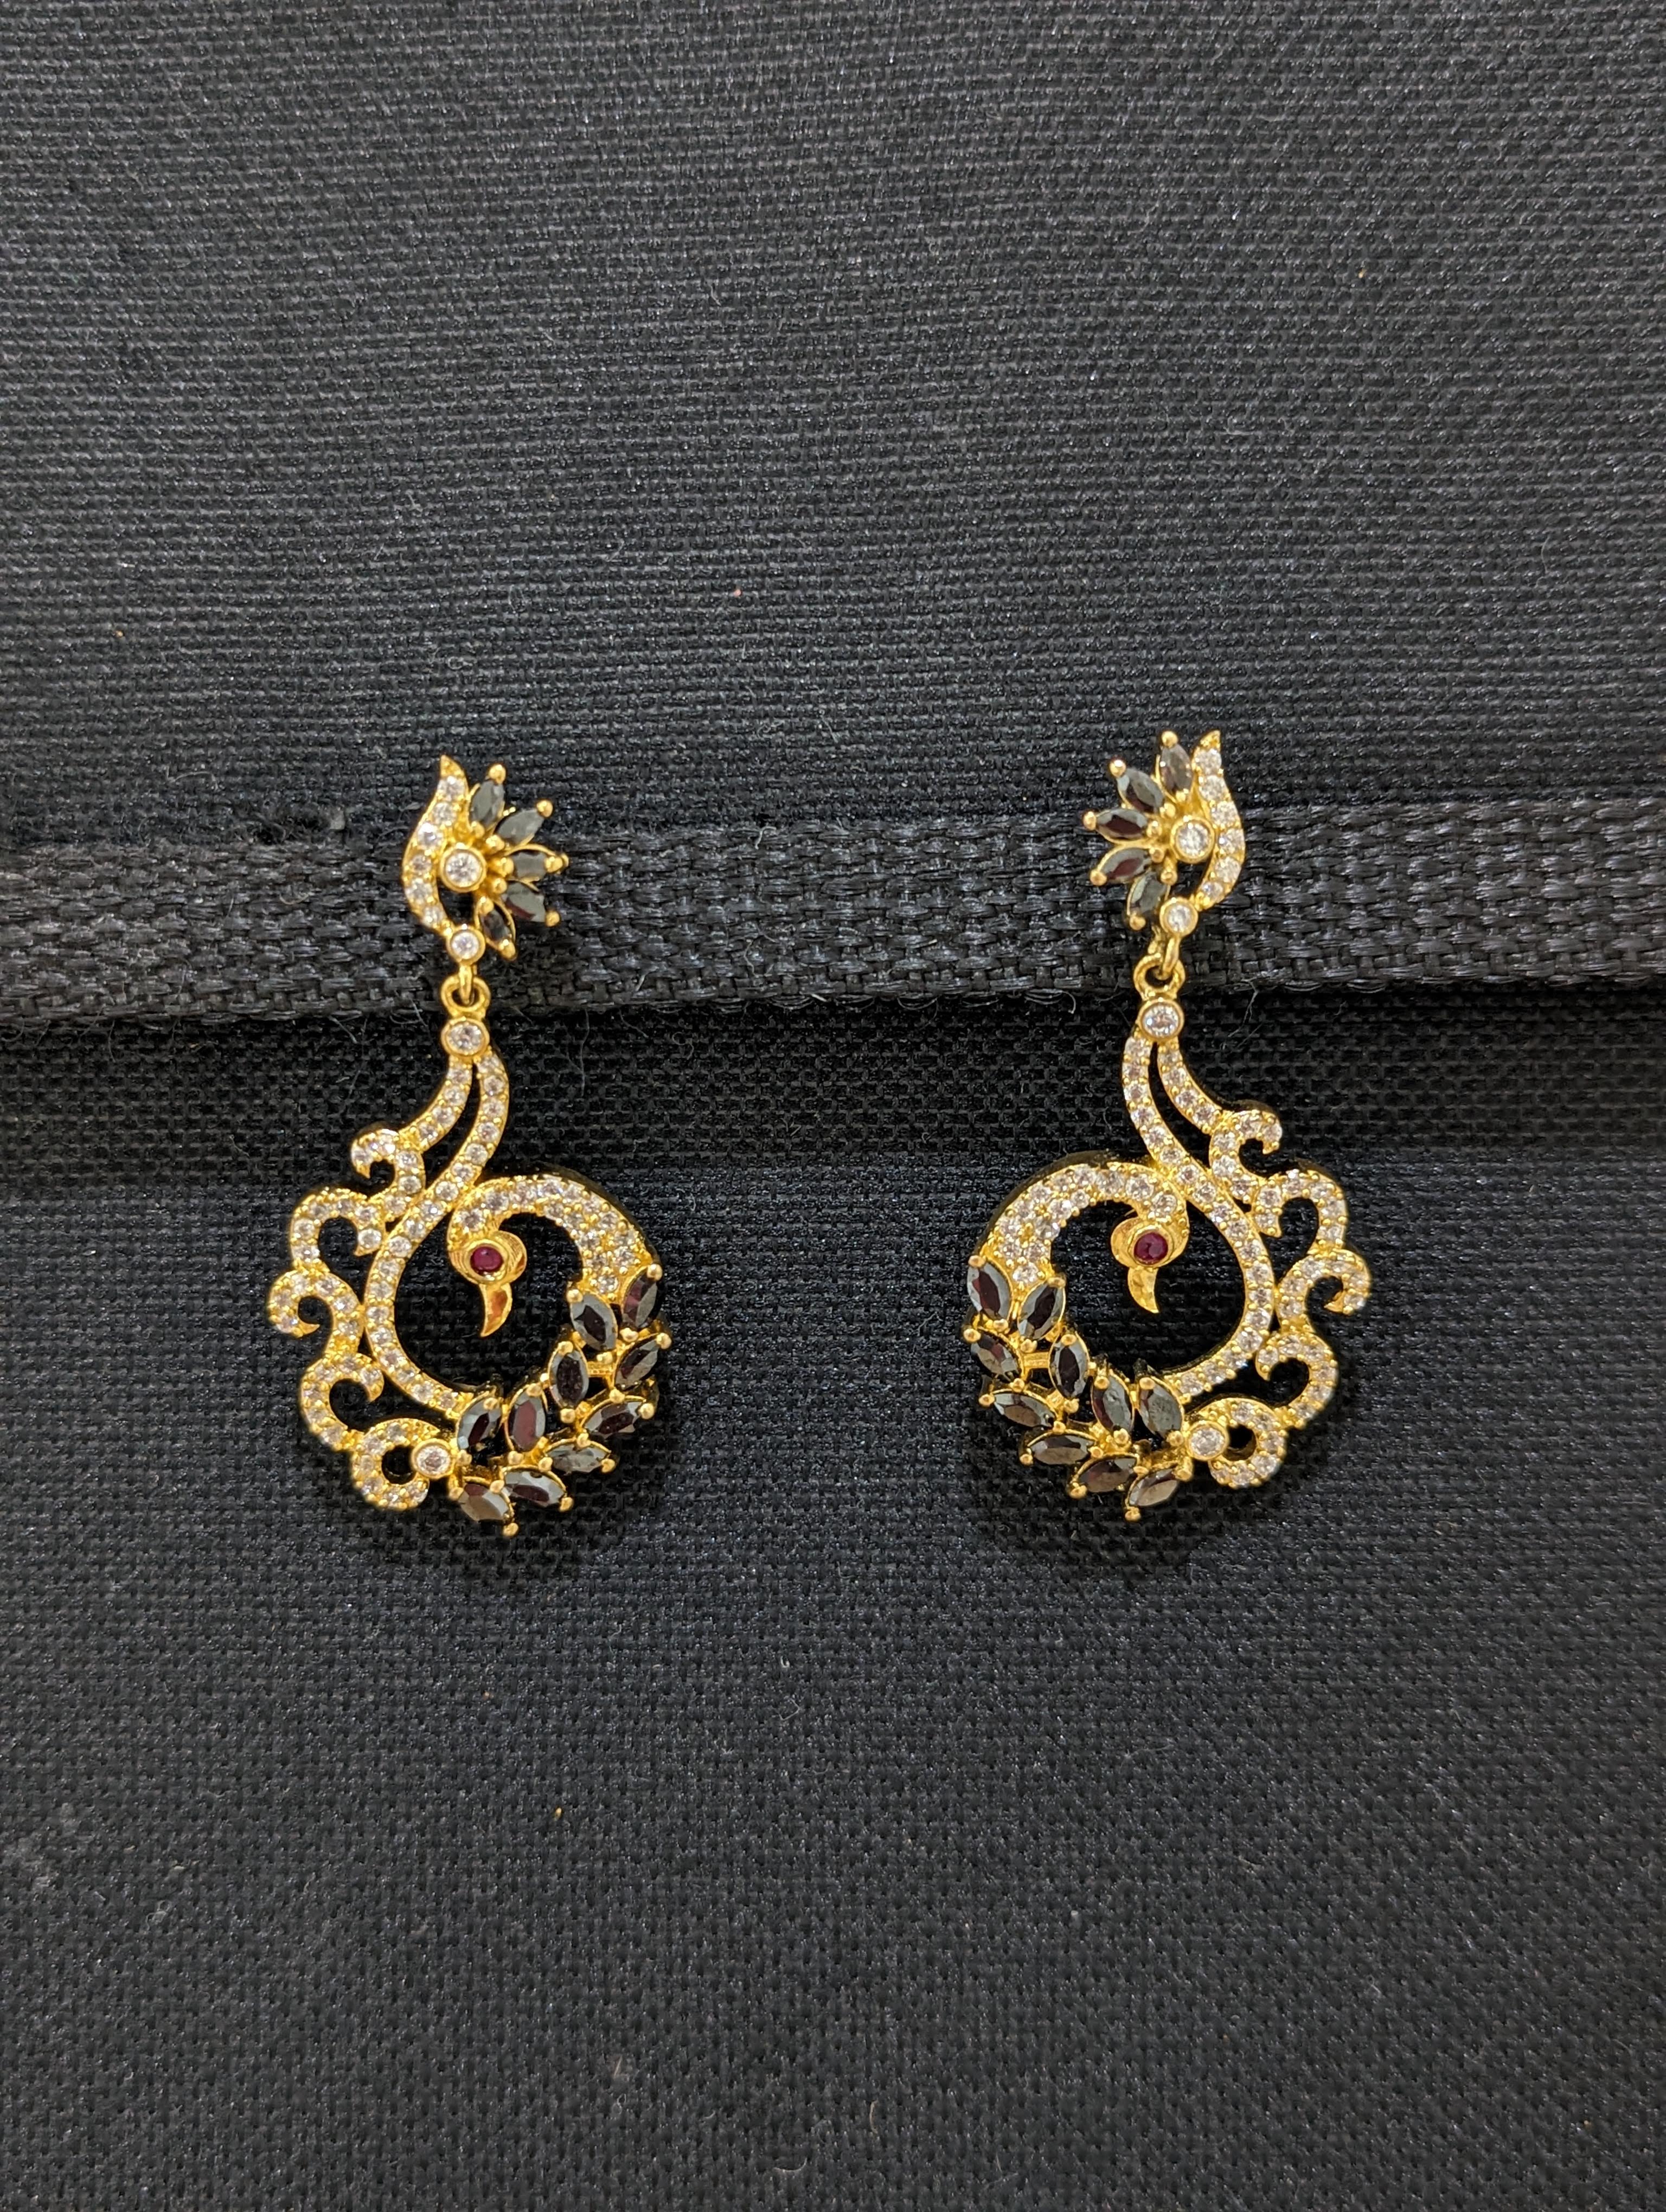 Cubic Zirconia Drop Earrings for Wedding | FashionCrab.com